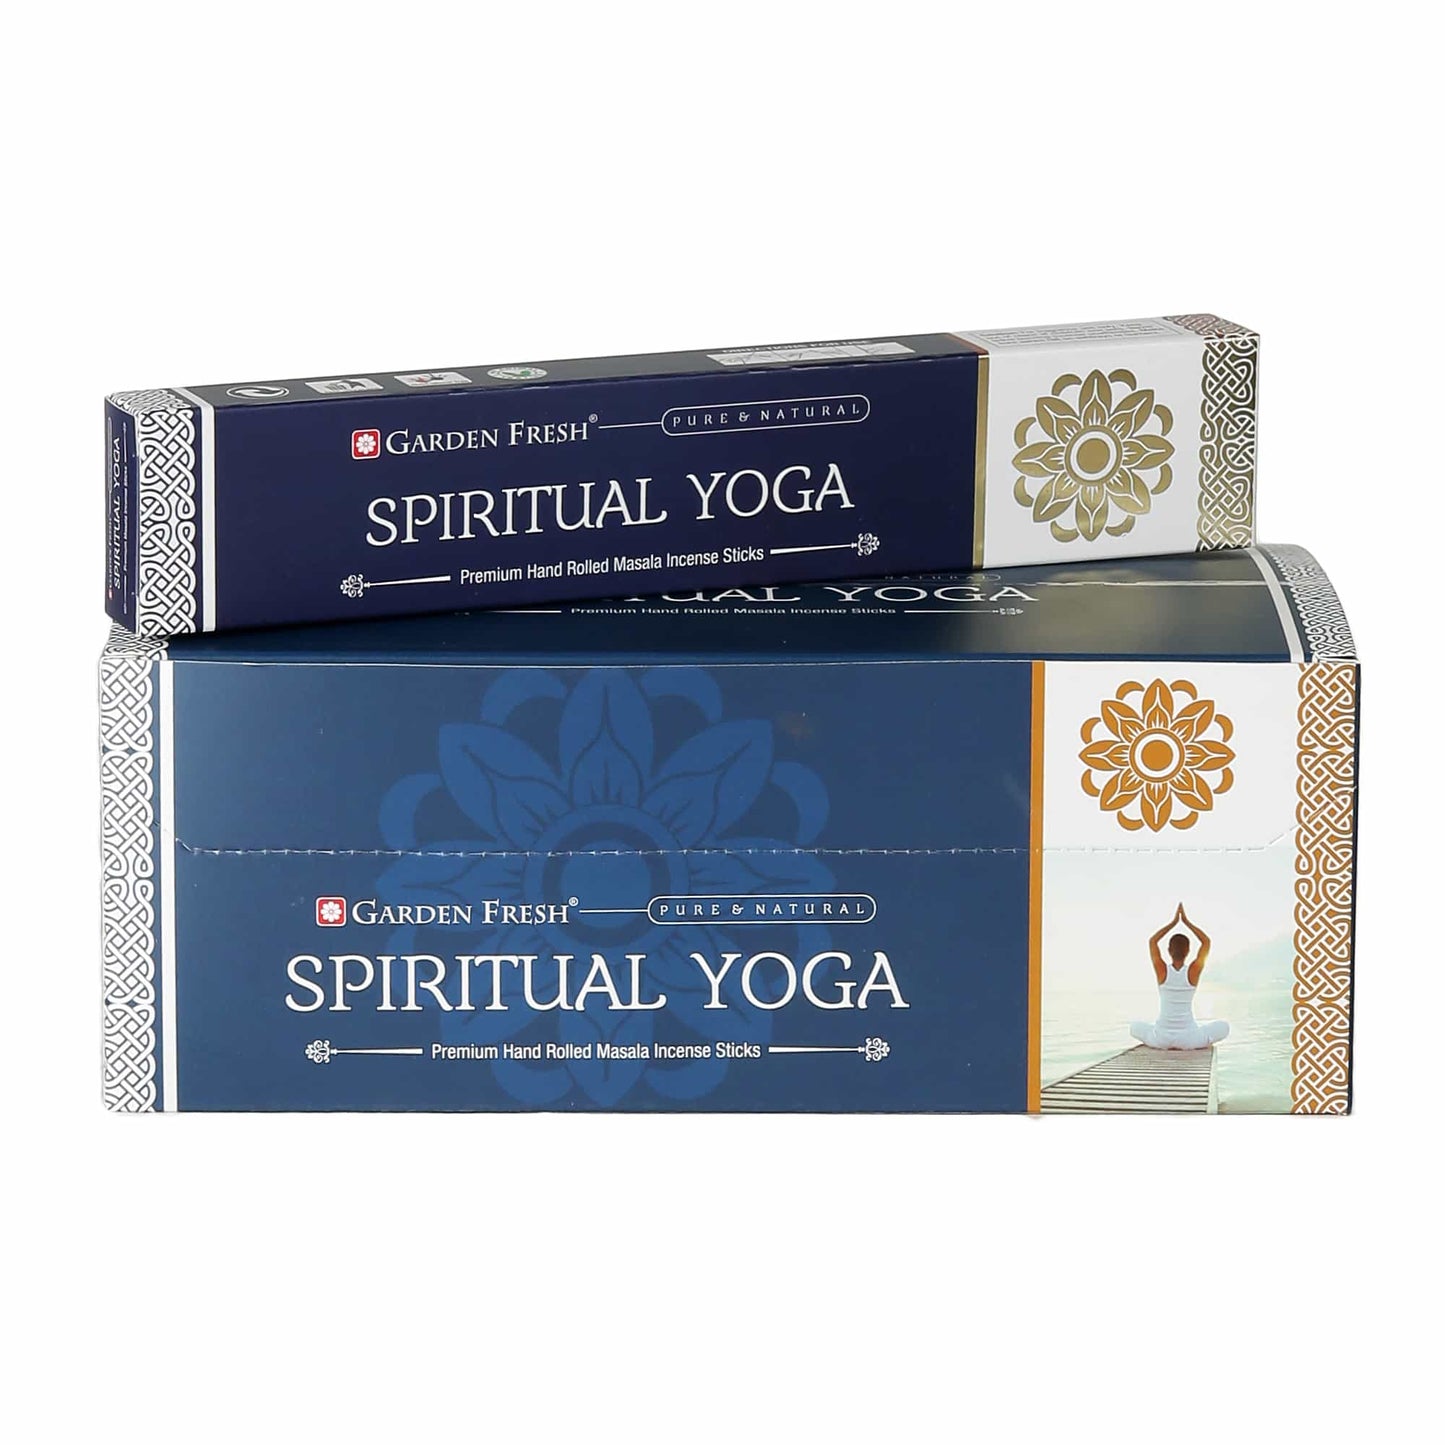 Spiritual Yoga masala incense sticks